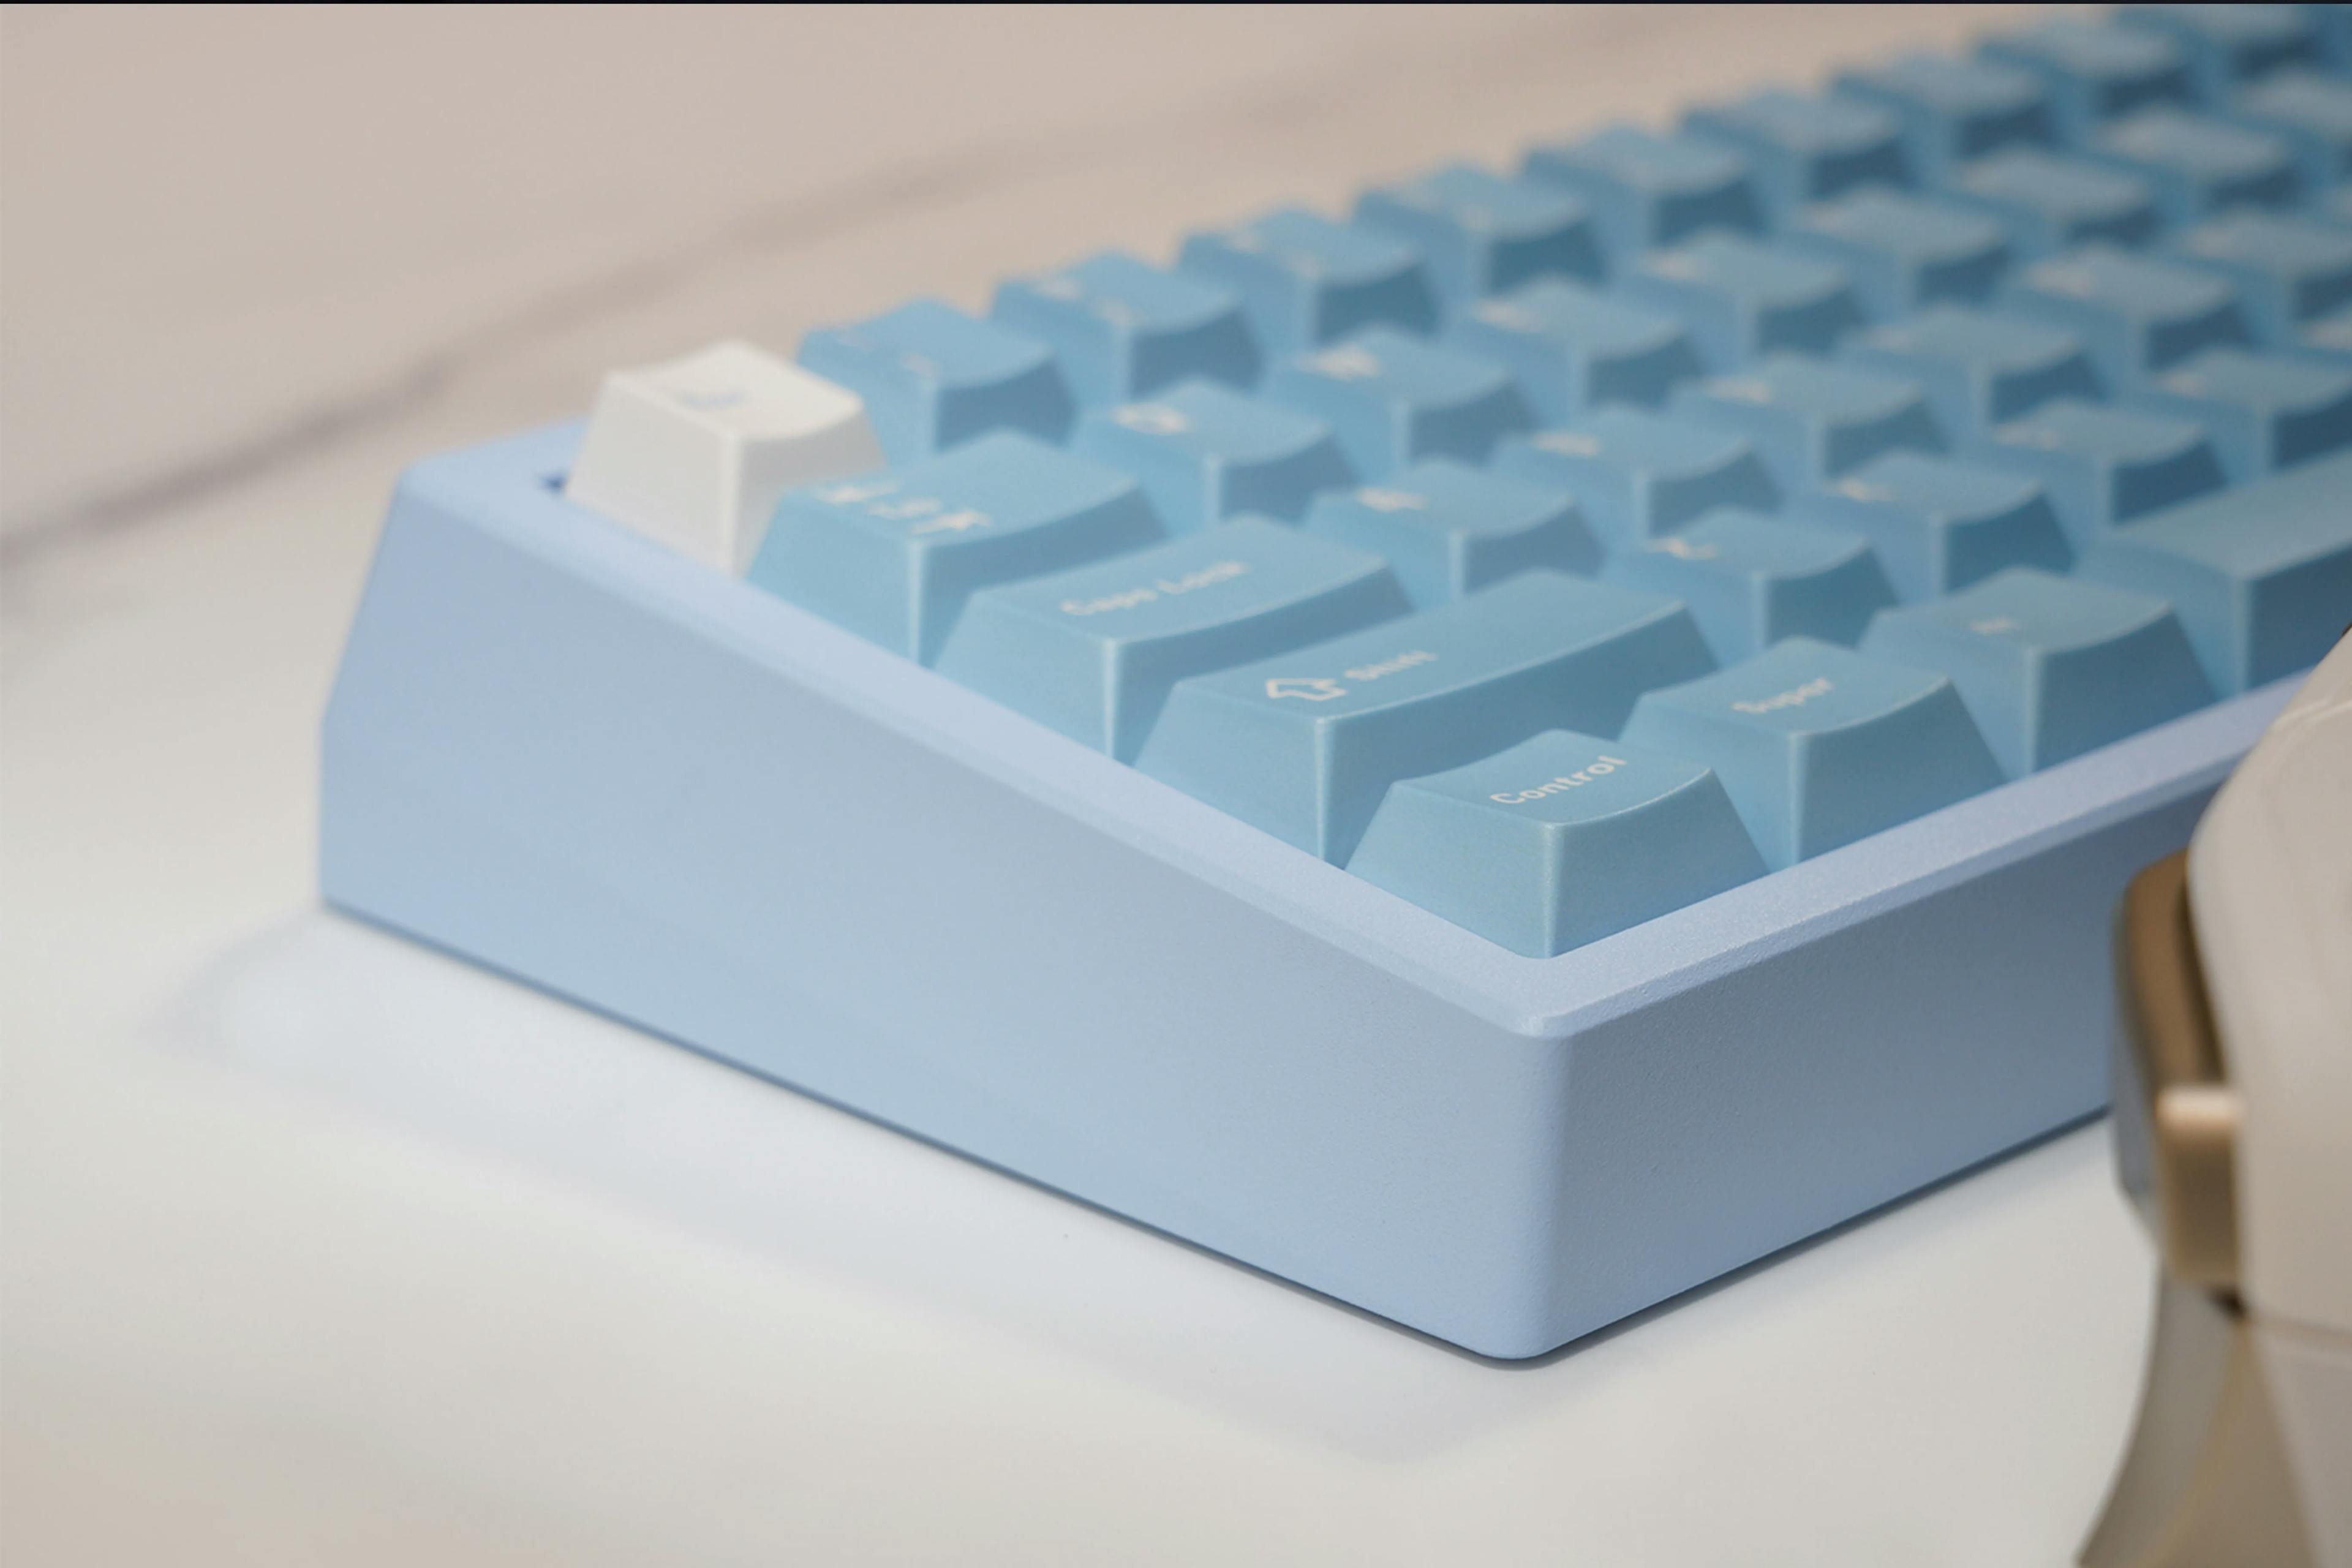 Image for [Pre-Order] Meletrix Zoom65 V2 EE - Barebones Keyboard Kit - Sky Blue [Air Shipping]